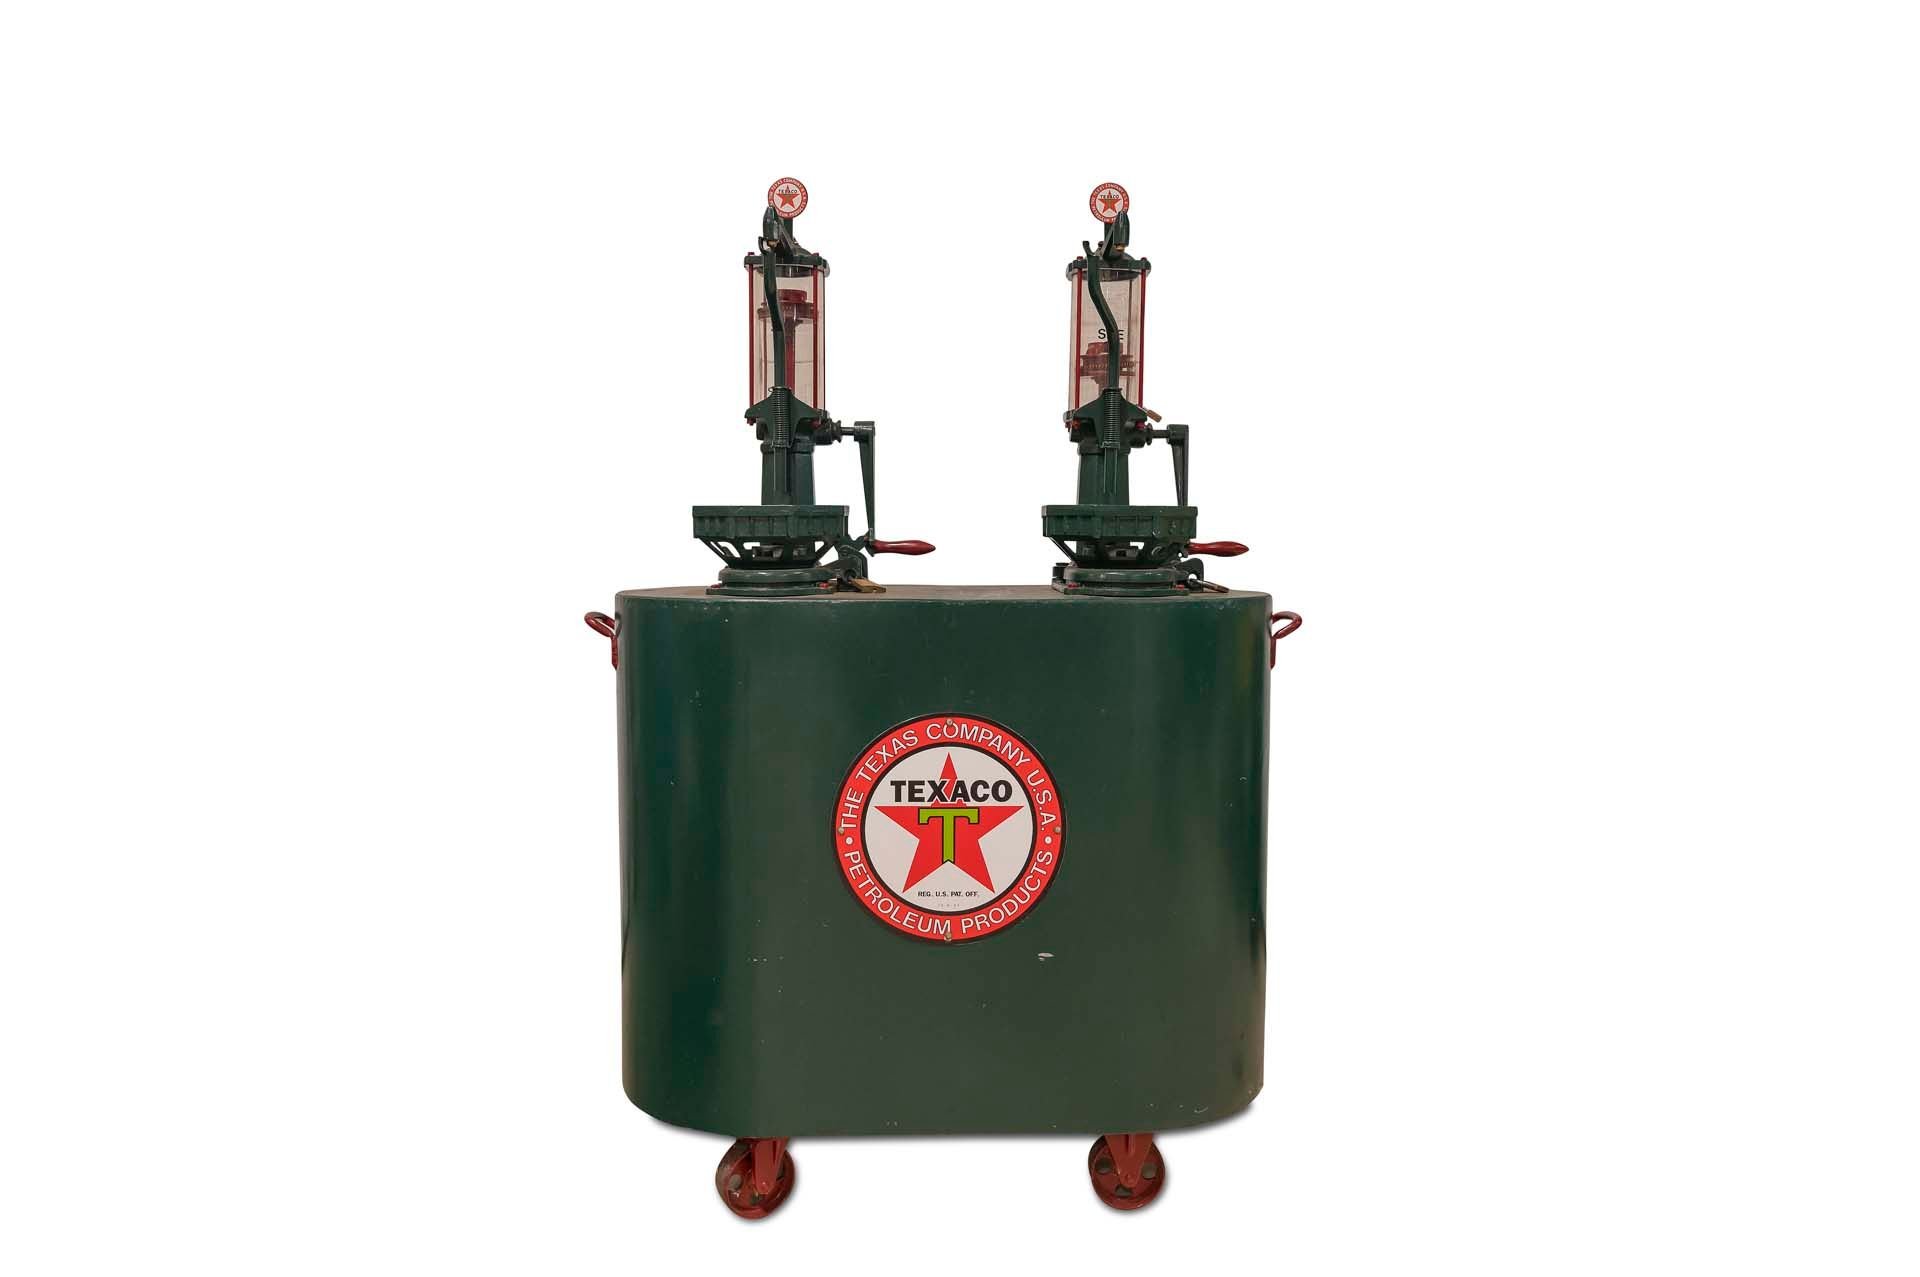 Broad Arrow Auctions | 'Texaco' Visible Double Oil Pump